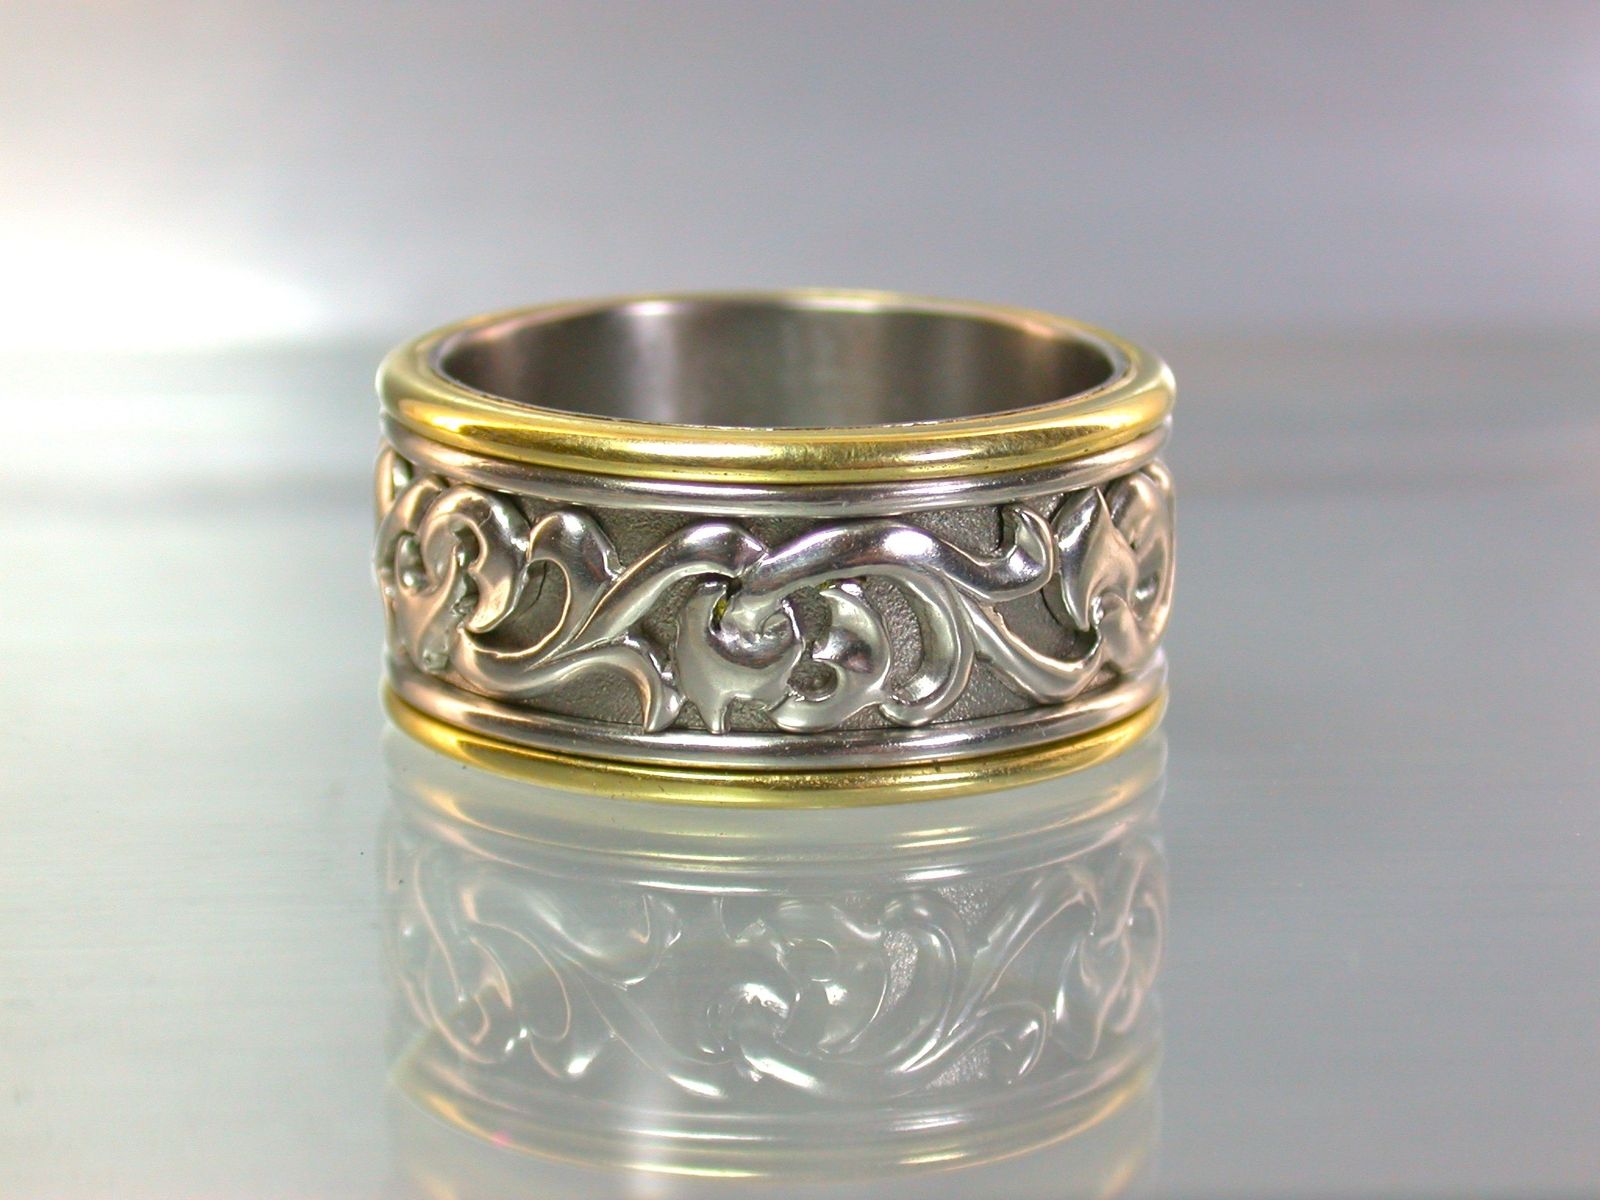 Custom Men's Platinum And Gold Ring by J Grahl Design | CustomMade.com